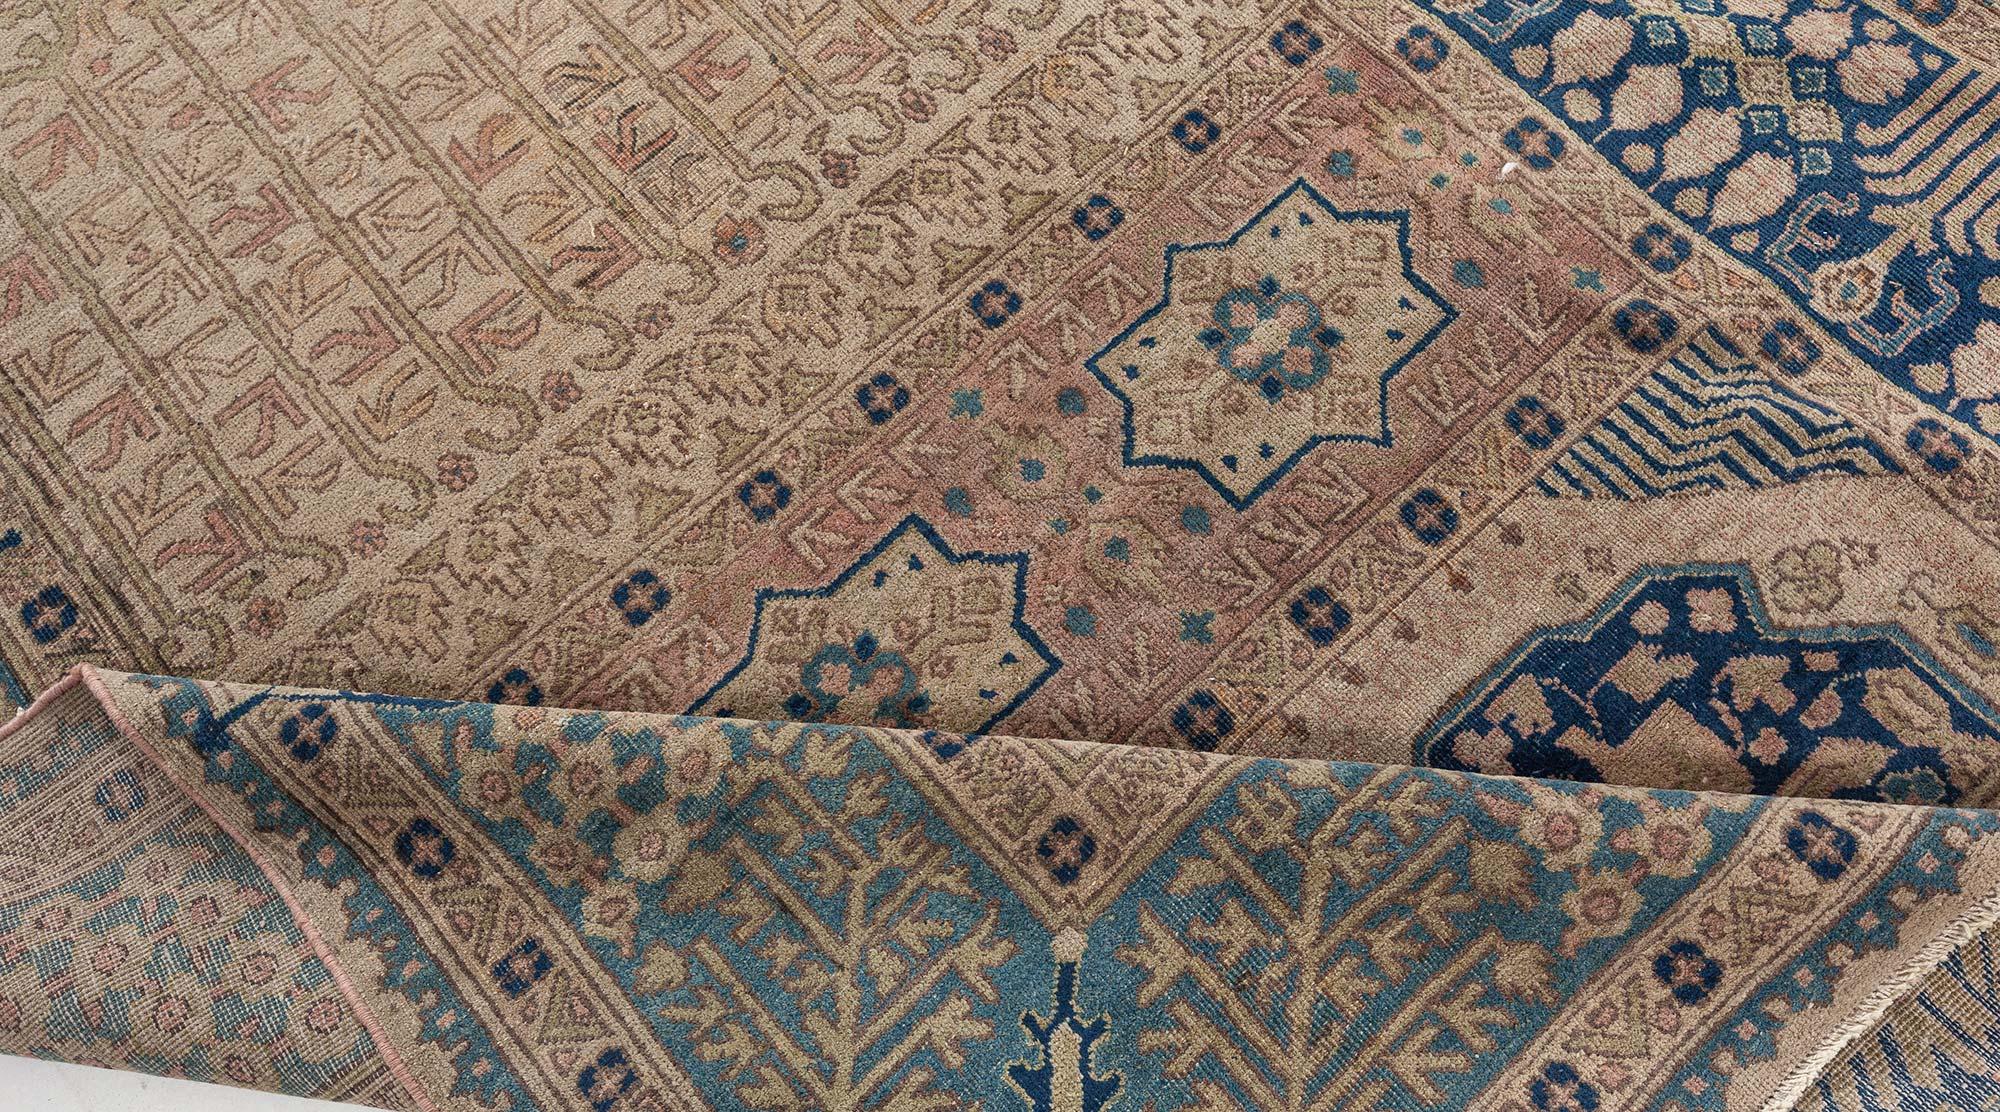 Antique Indian rug by Doris Leslie Blau
Size: 11'6